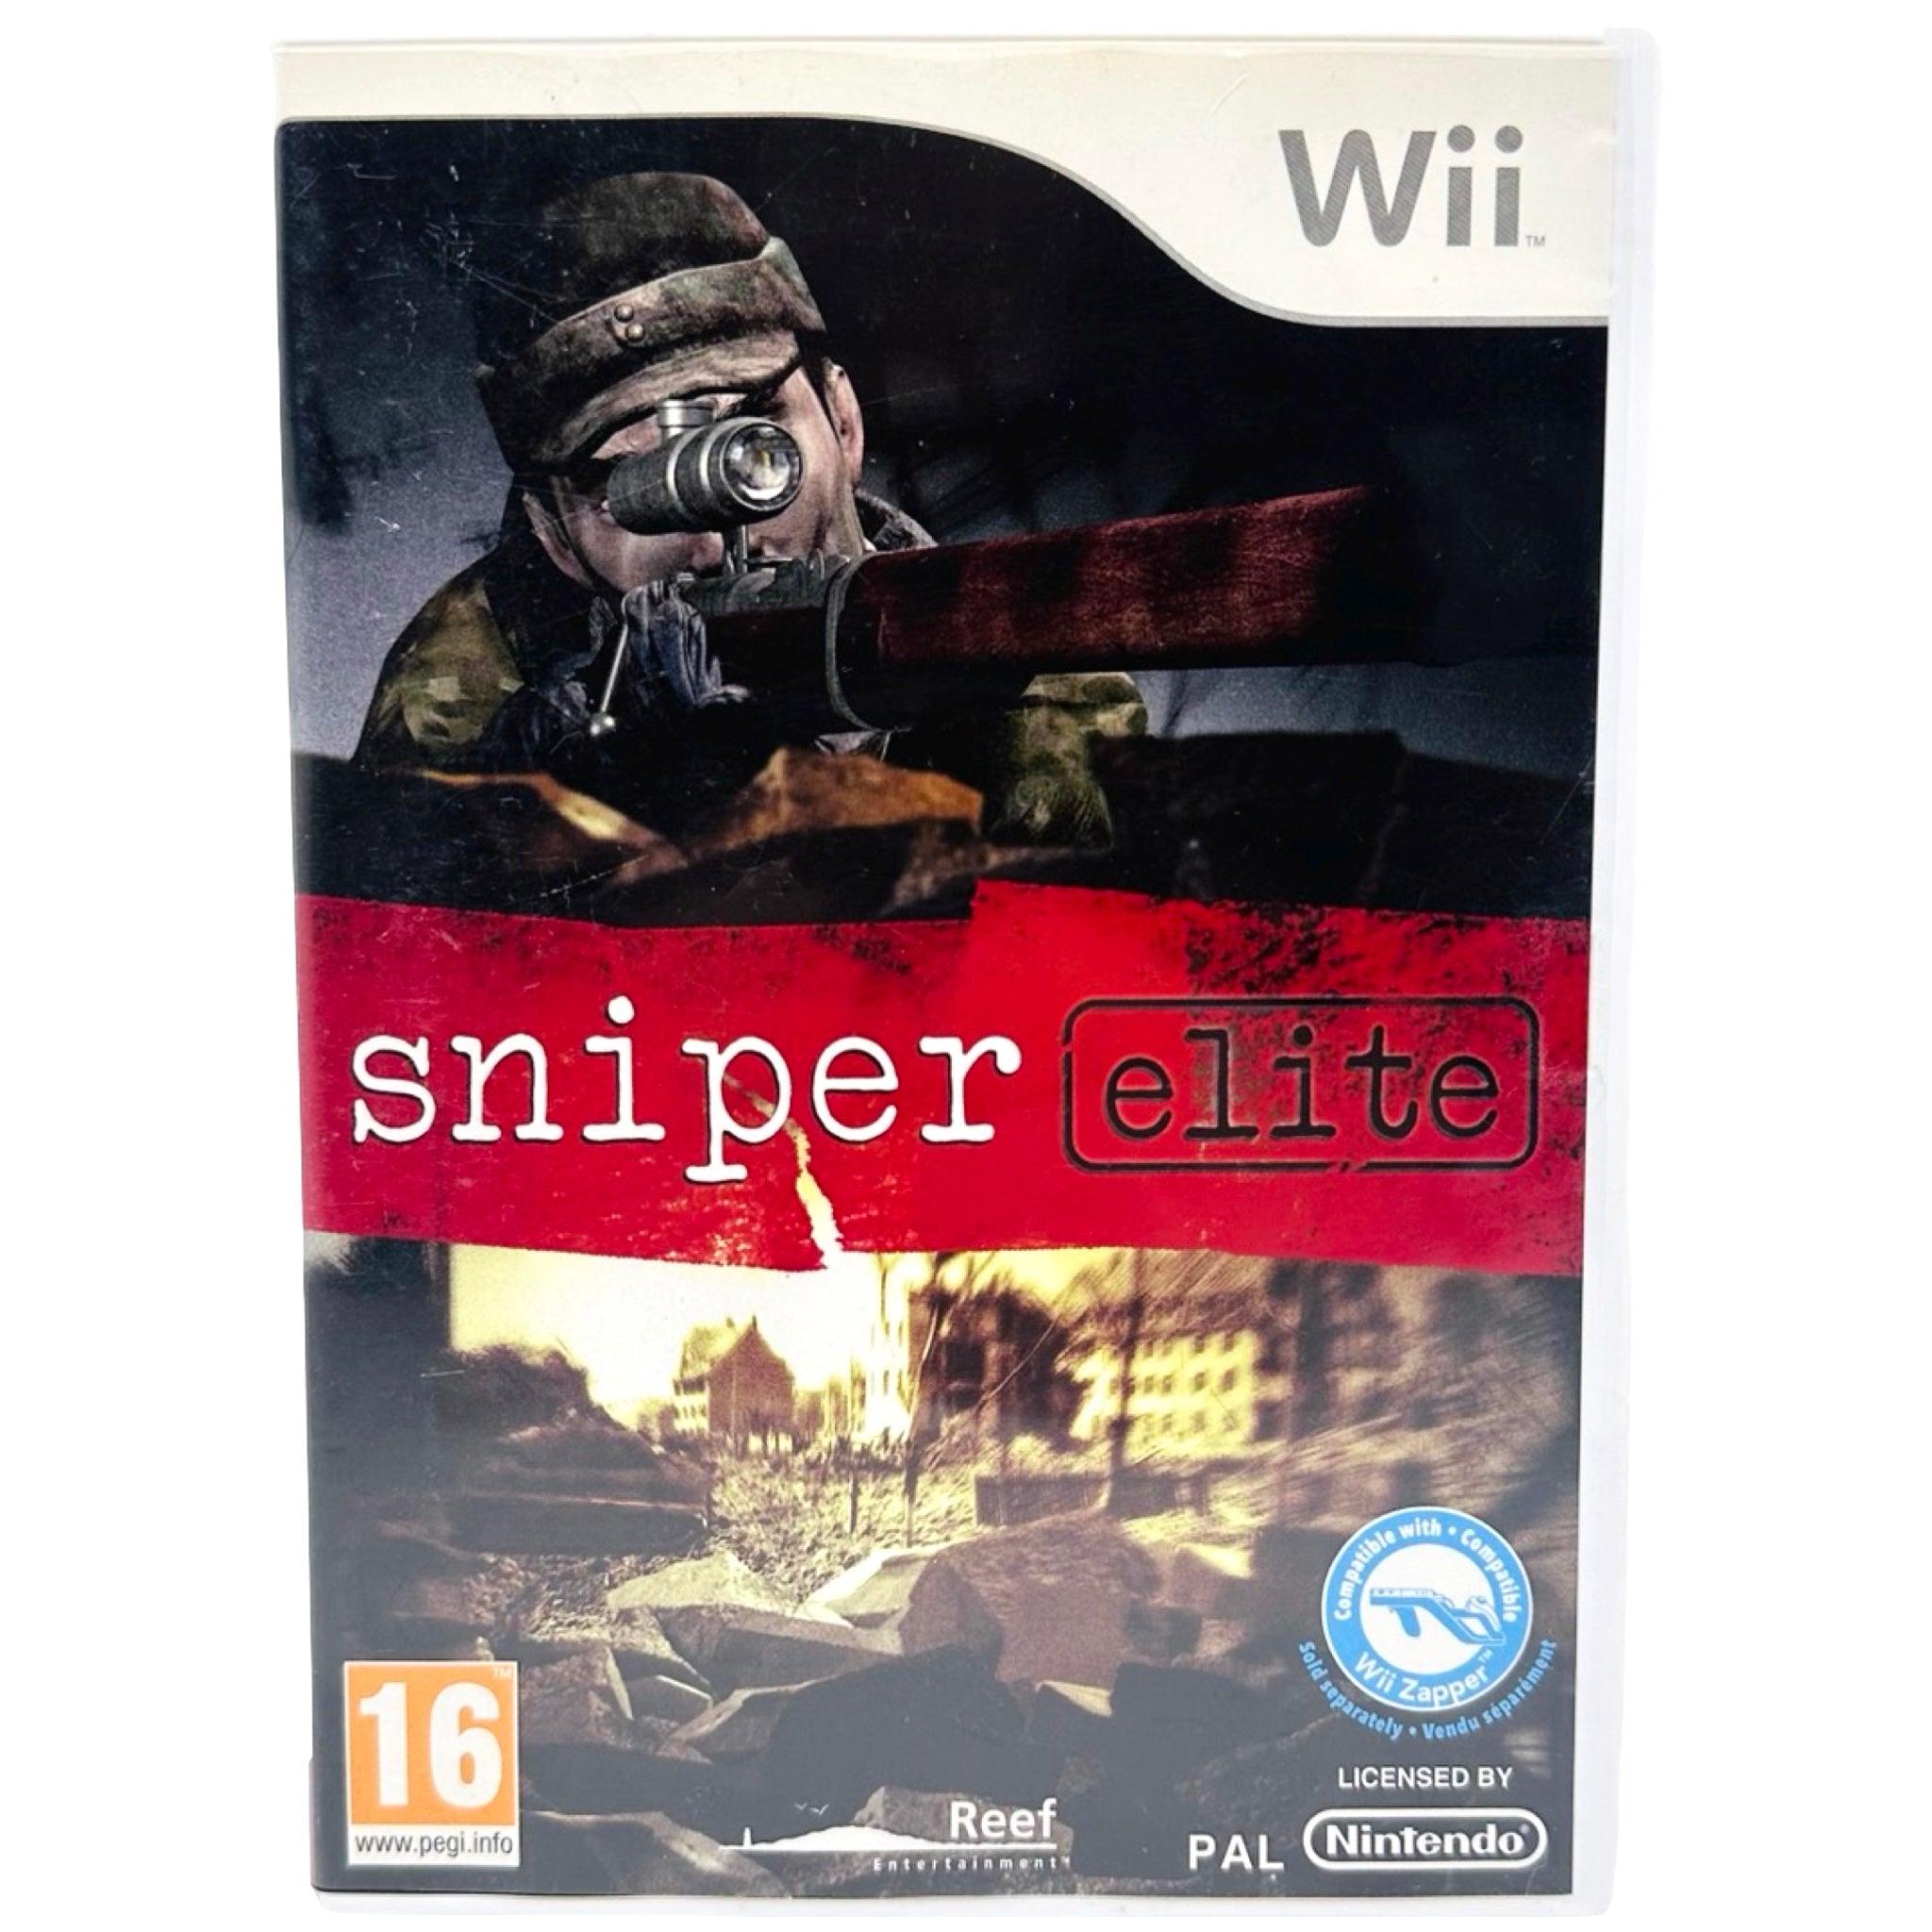 Wii: Sniper Elite - RetroGaming.No